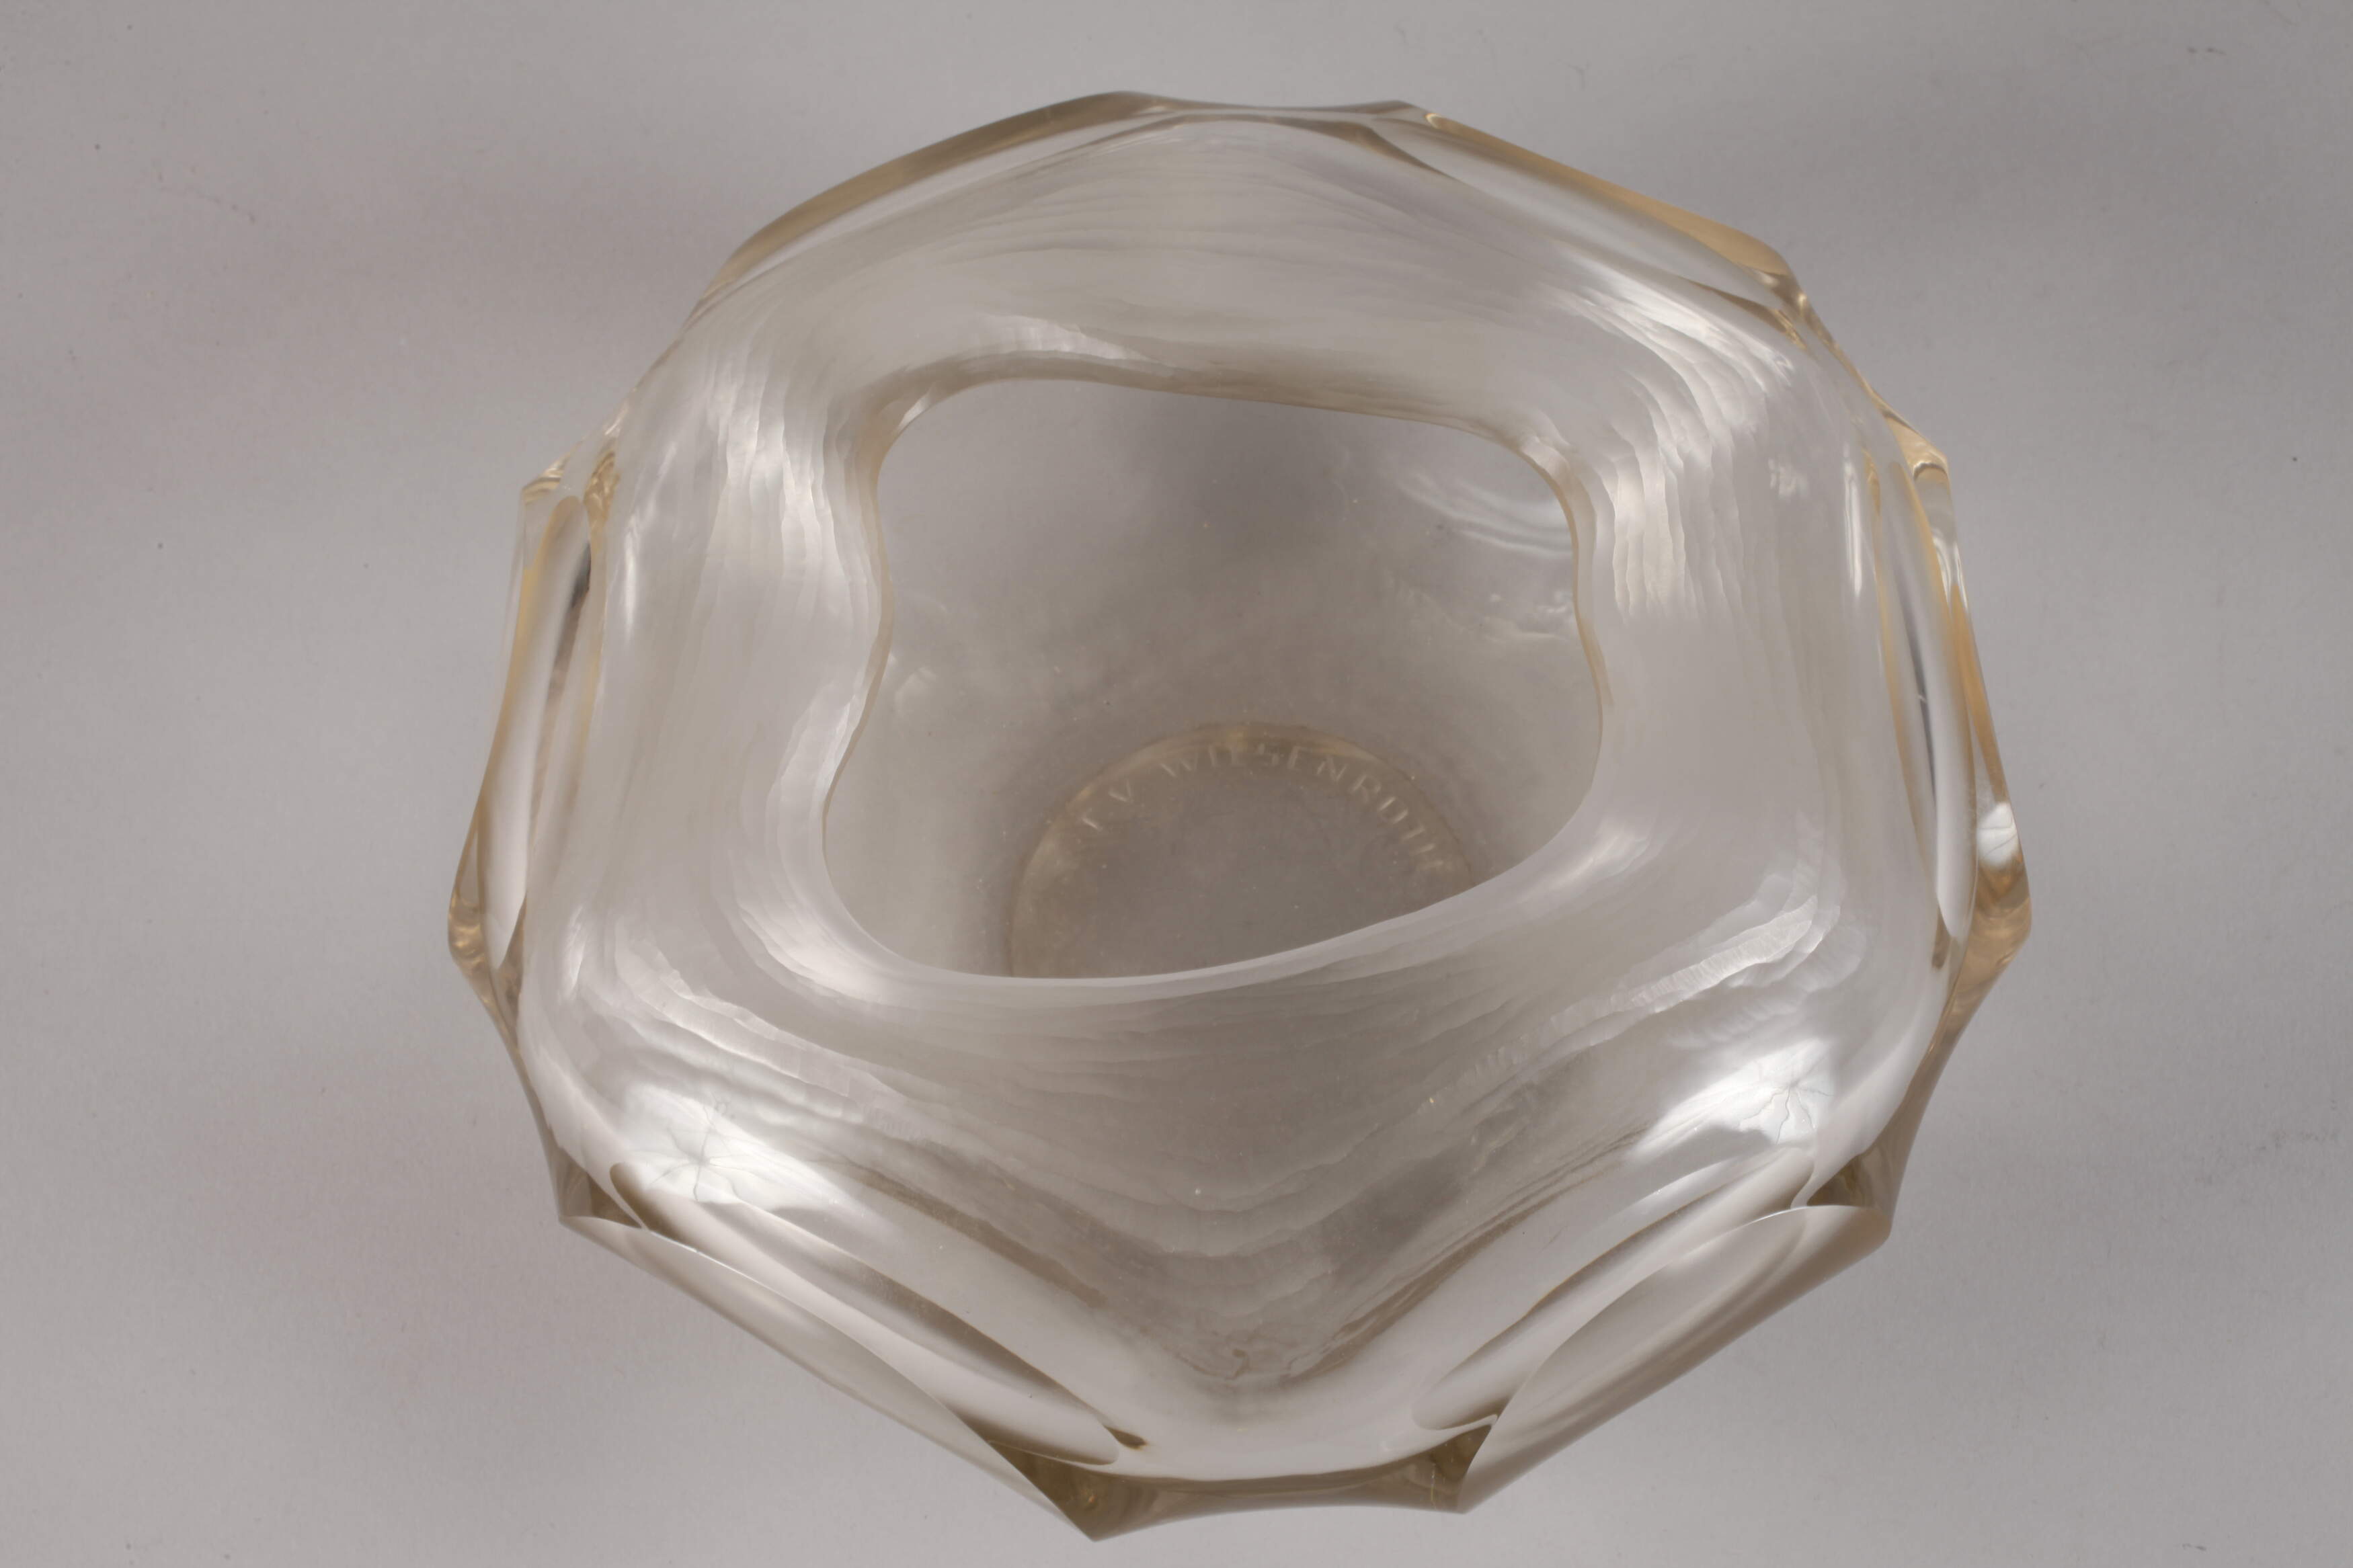 Staatliche Glasfachschule Hadamar bowl - Image 2 of 5